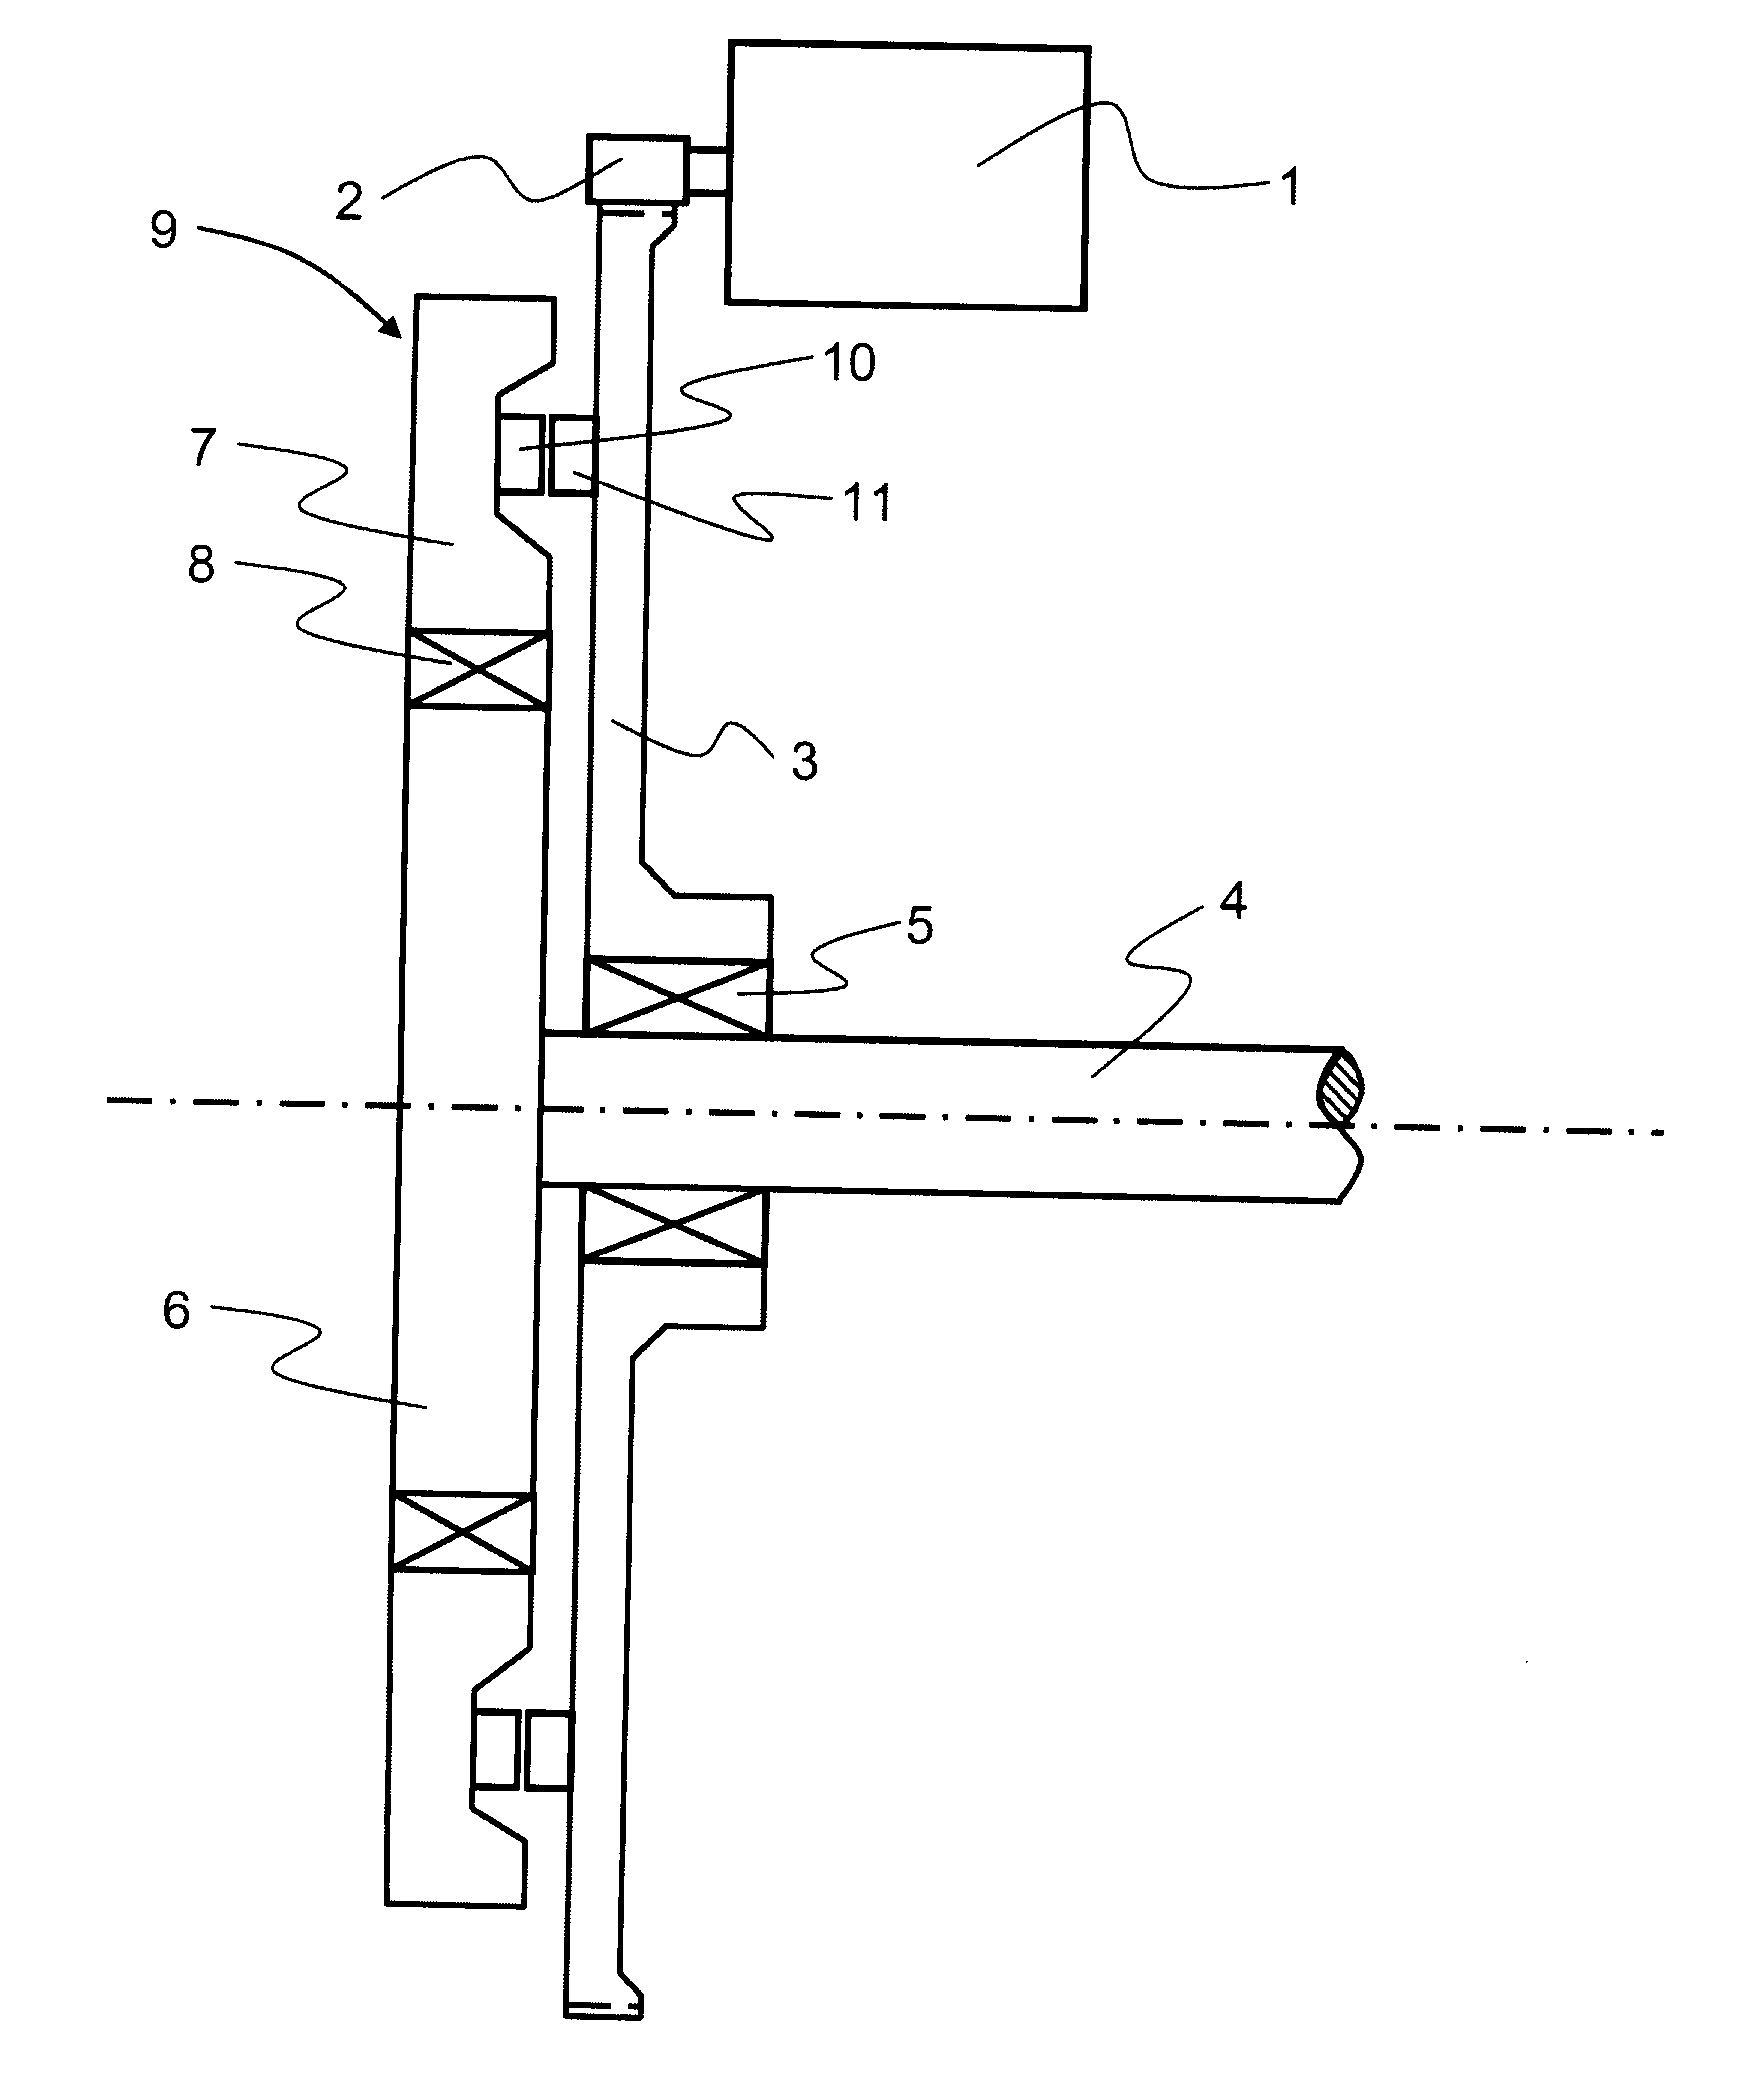 Flywheel arrangement for an internal combustion engine